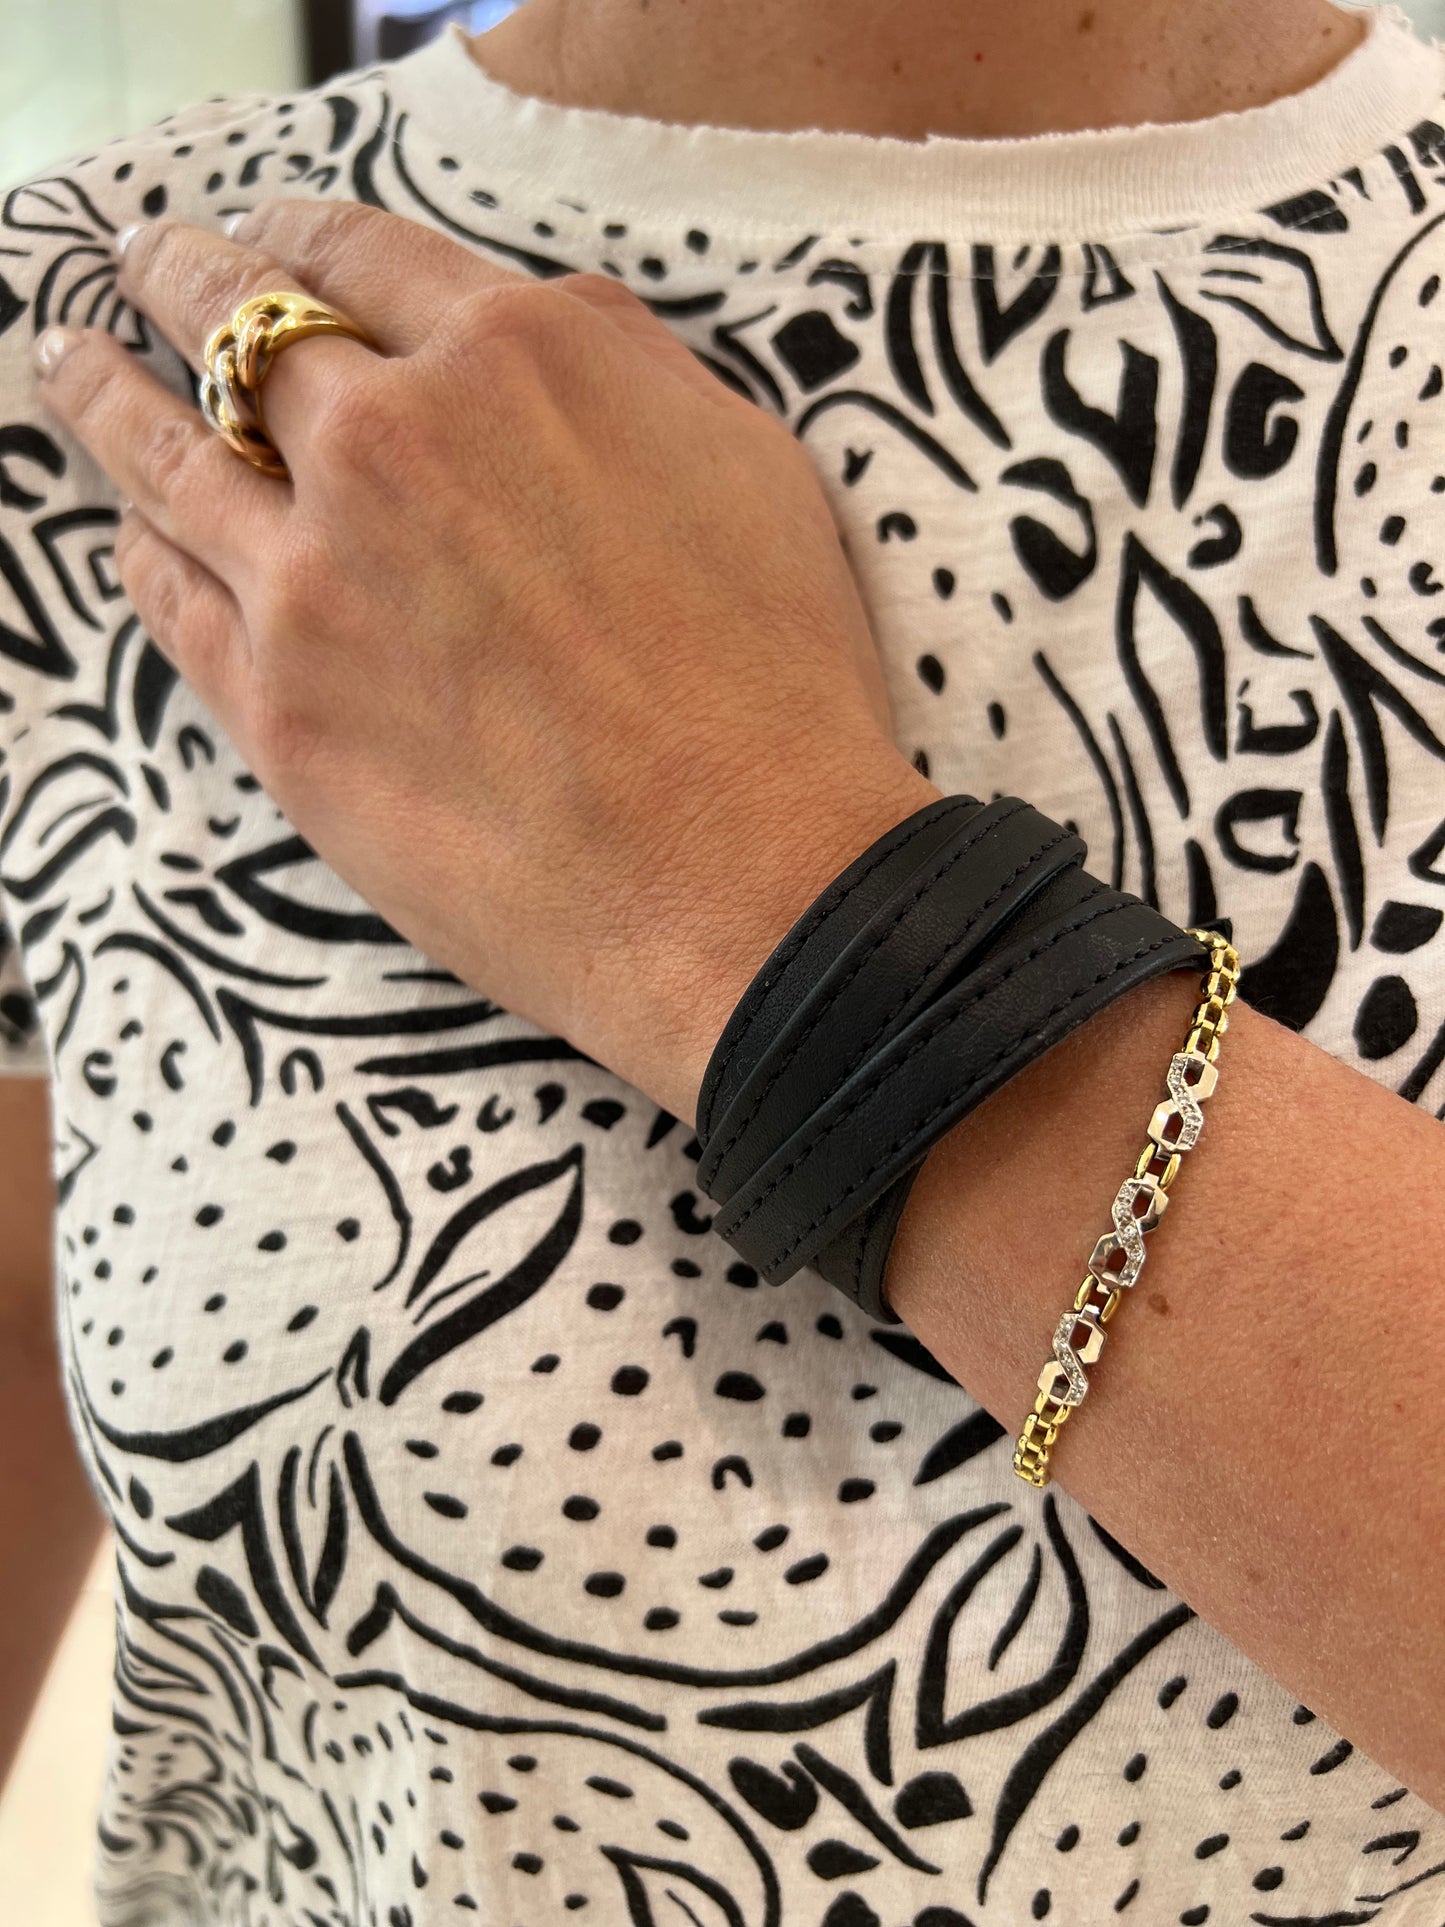 Handcrafted Black Leather & Gold-Plated Accents Four Times Wrapped Bracelet by LALÉ Bracelets - LALEBRACELETS